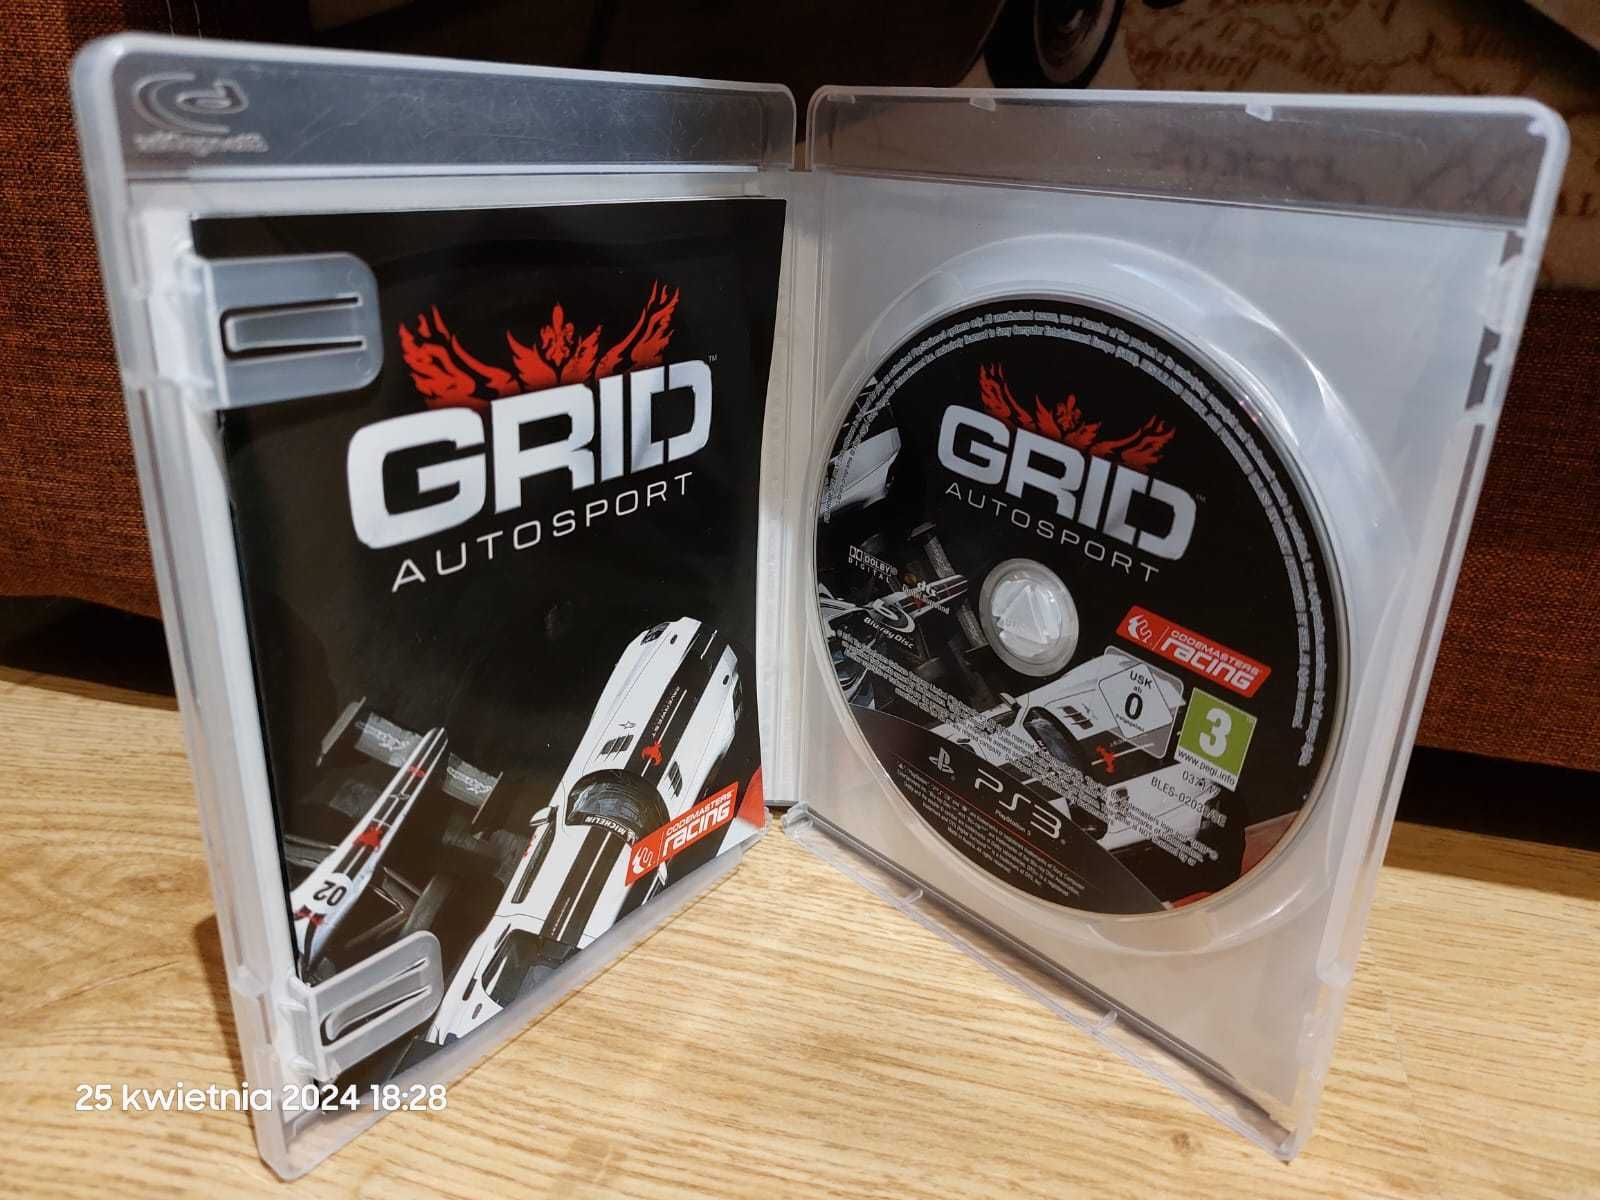 GRID: Autosport PlayStation 3